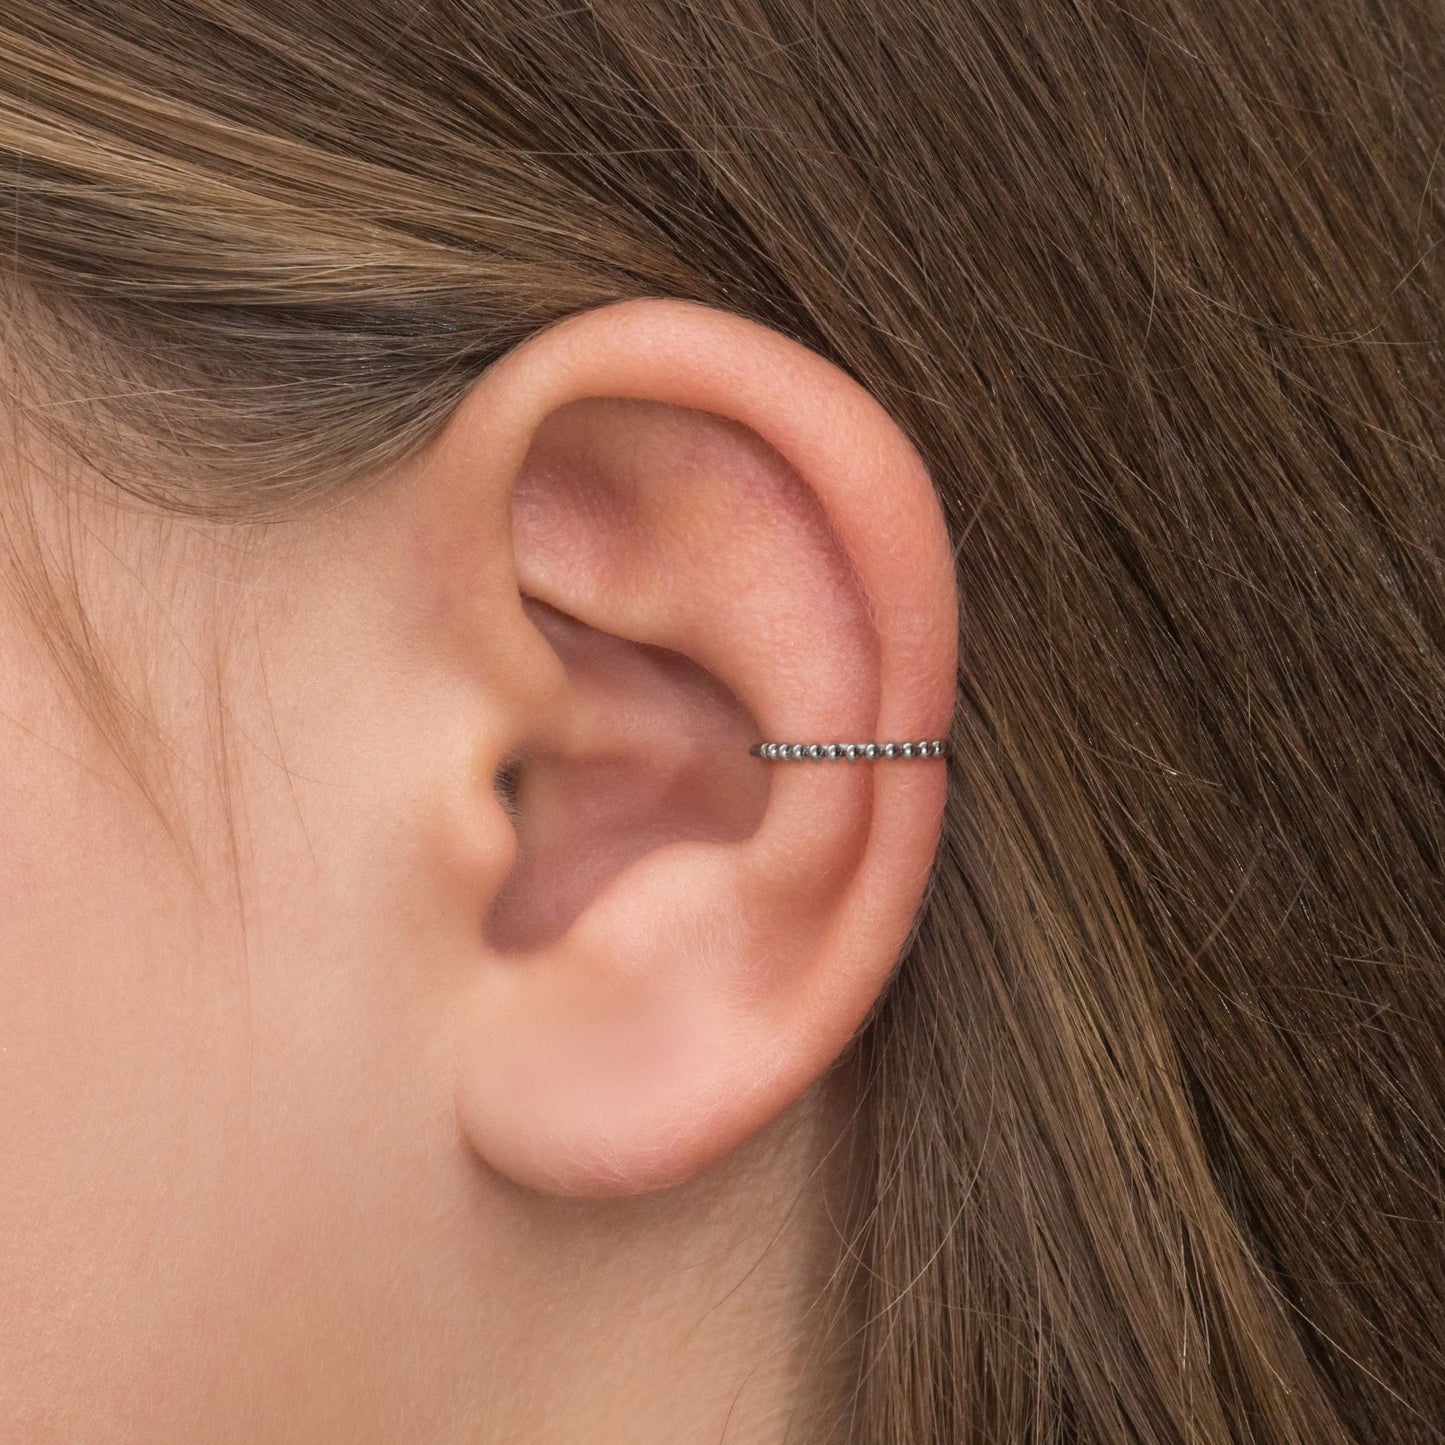 Rook Earring Surgical Steel - TitaniumFashion